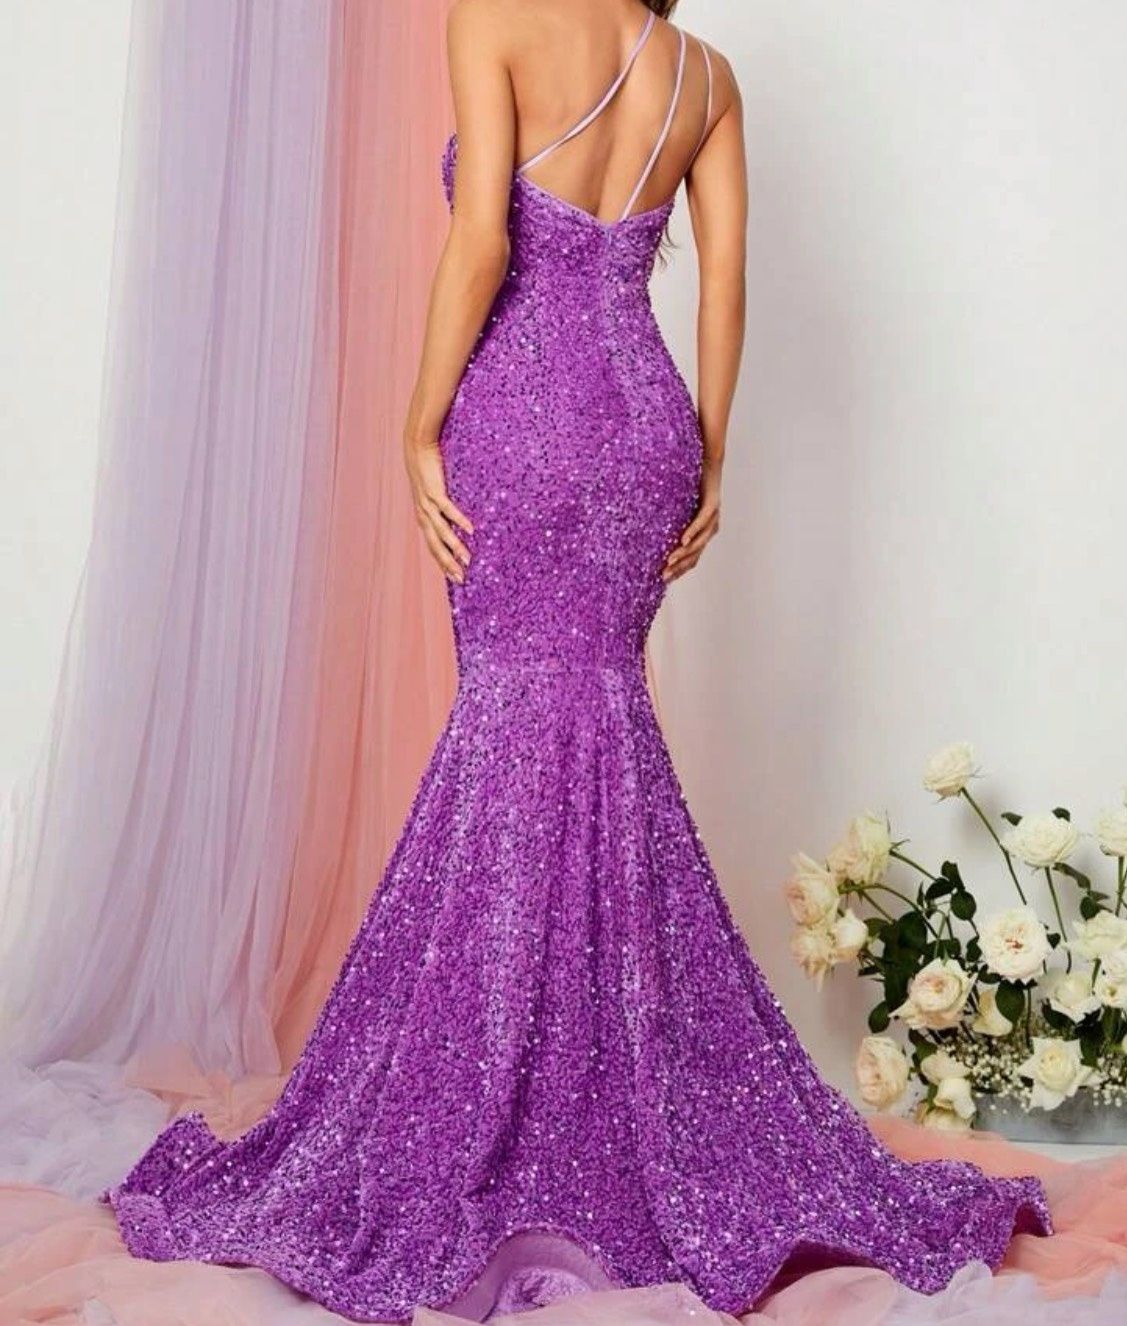 MERMAiD Size 4 Prom One Shoulder Light Purple Mermaid Dress on Queenly